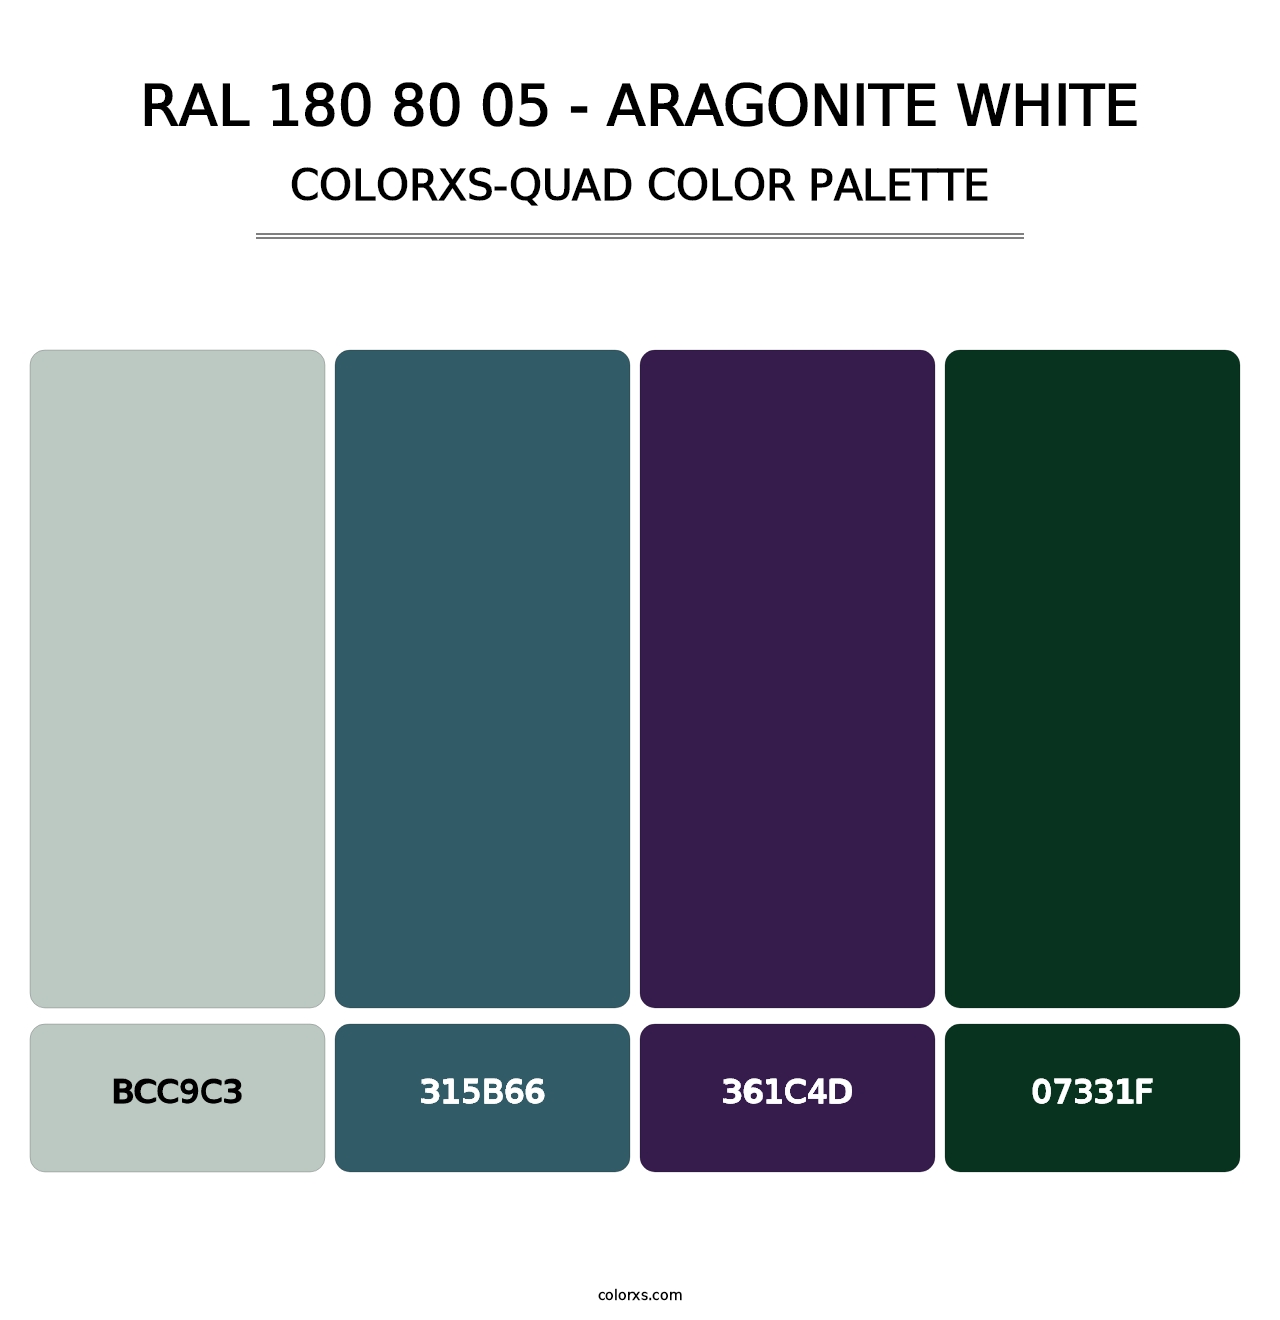 RAL 180 80 05 - Aragonite White - Colorxs Quad Palette